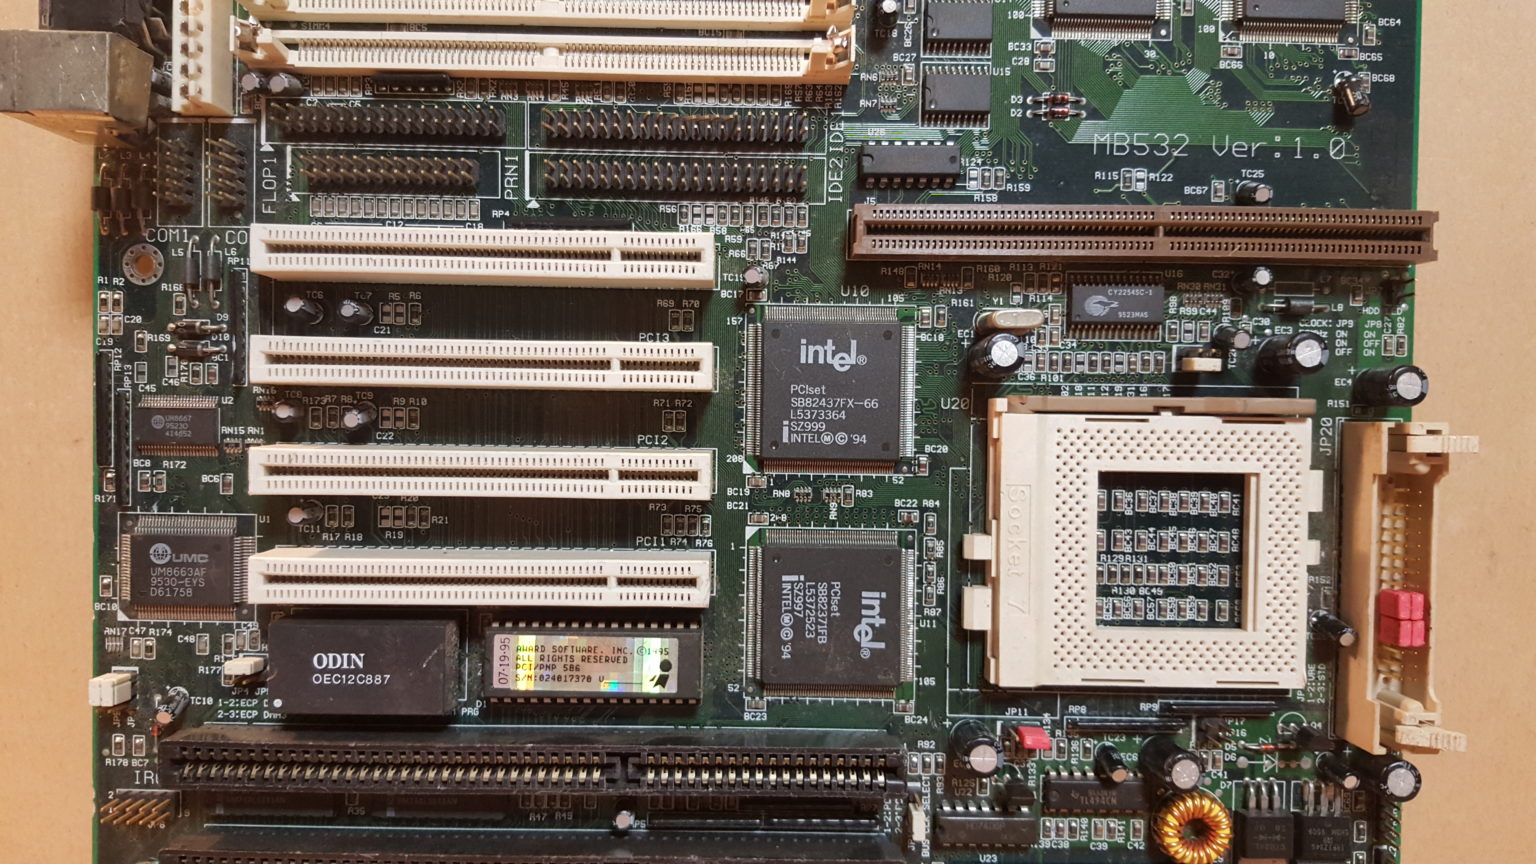 Powertech MB532 Ver 1.0 Socket 7 Motherboard, Intel PCIset SB82437FX-66